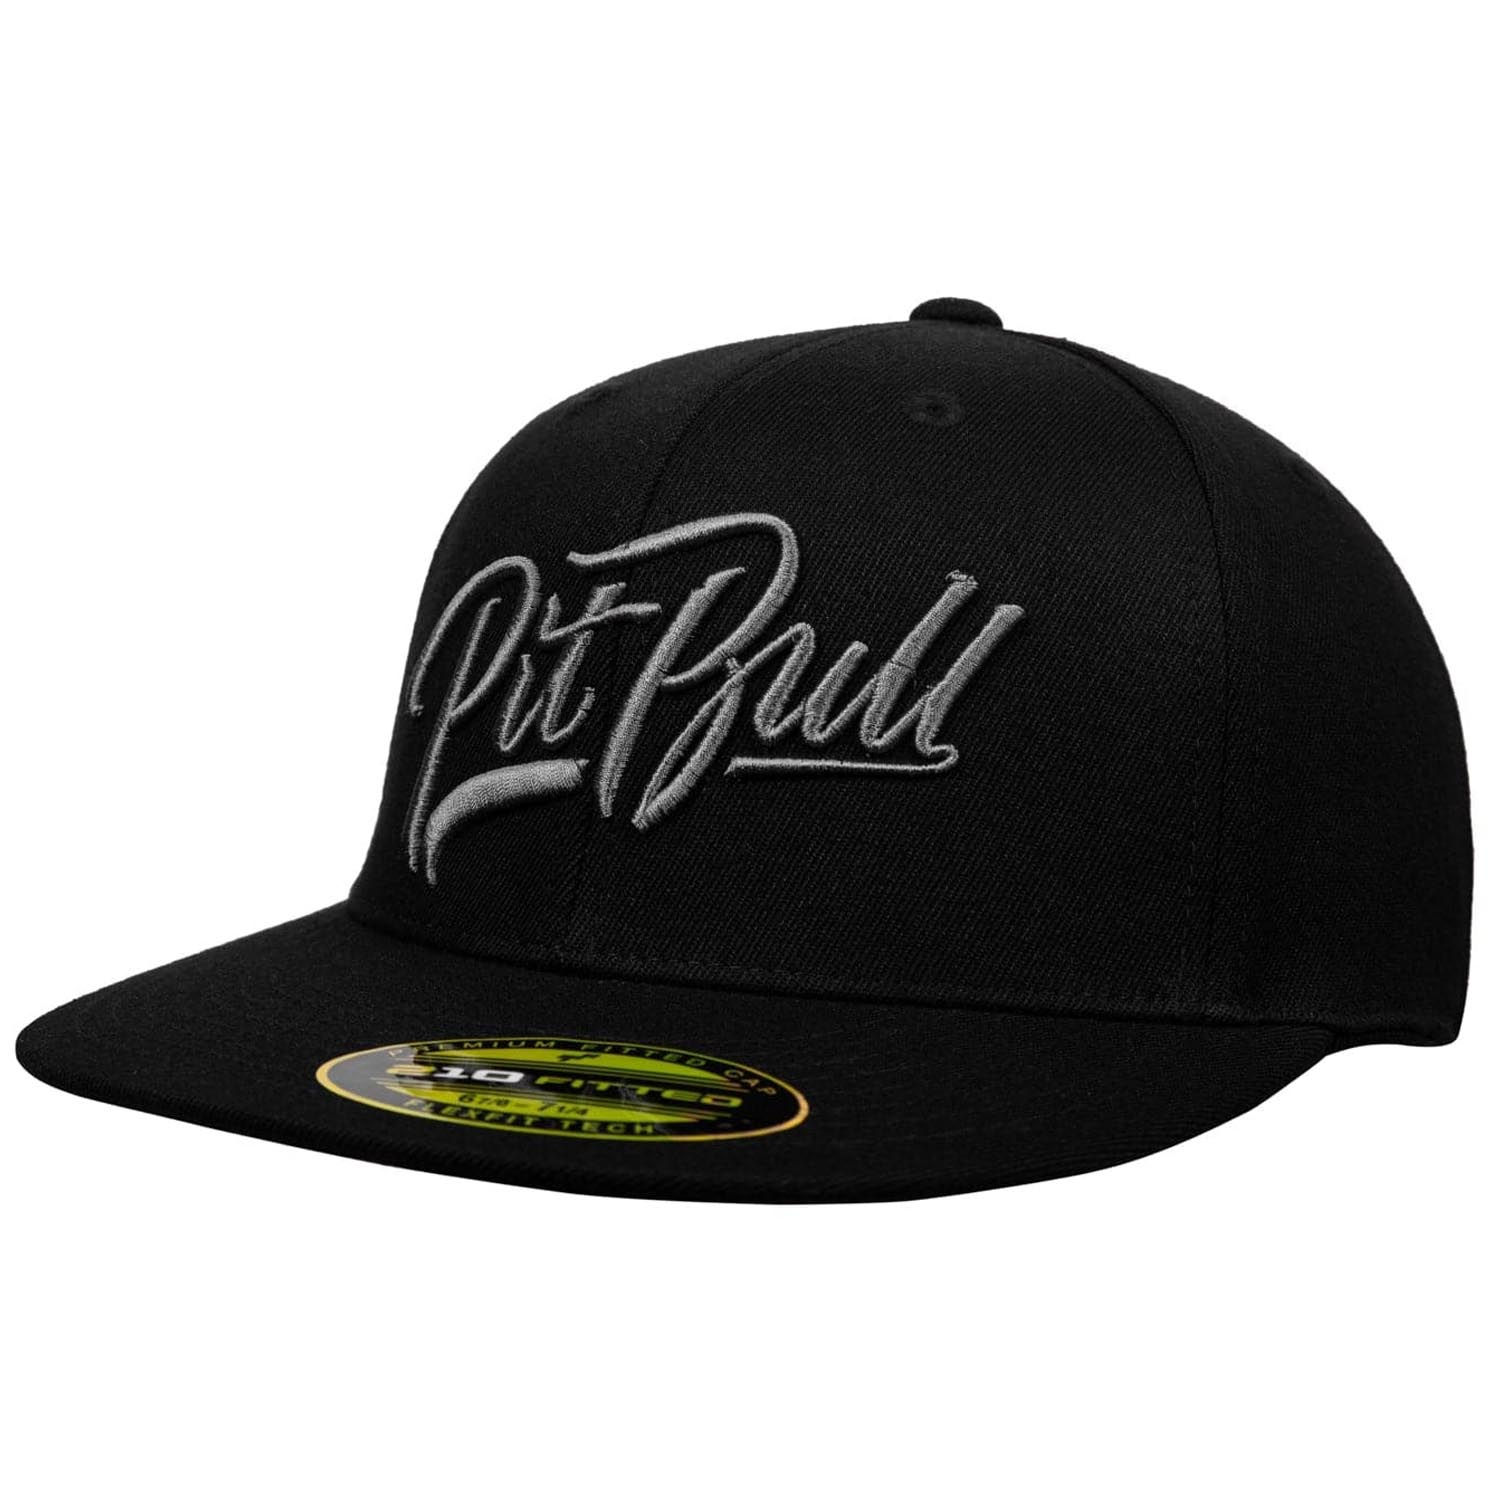 Pit Bull West Coast Full Cap, El Jeffe YP Classic, schwarz-grau